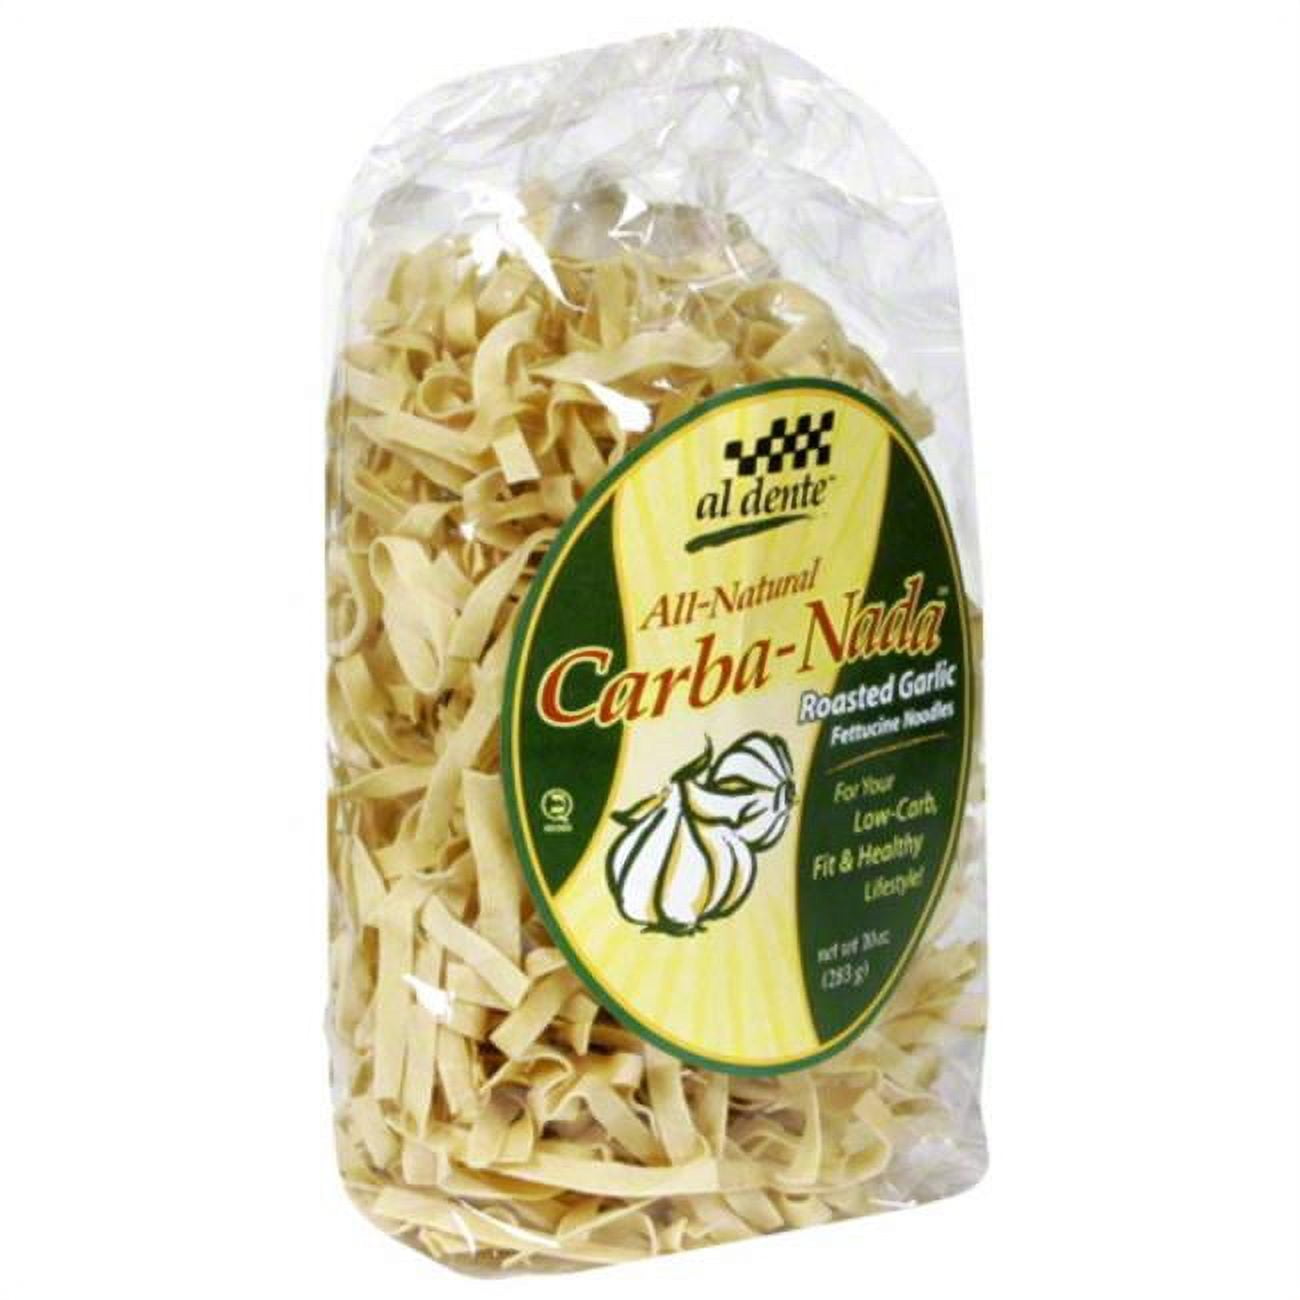 Al Dente Carba-Nada Roasted Garlic Fettucine Noodles 10 oz Bag